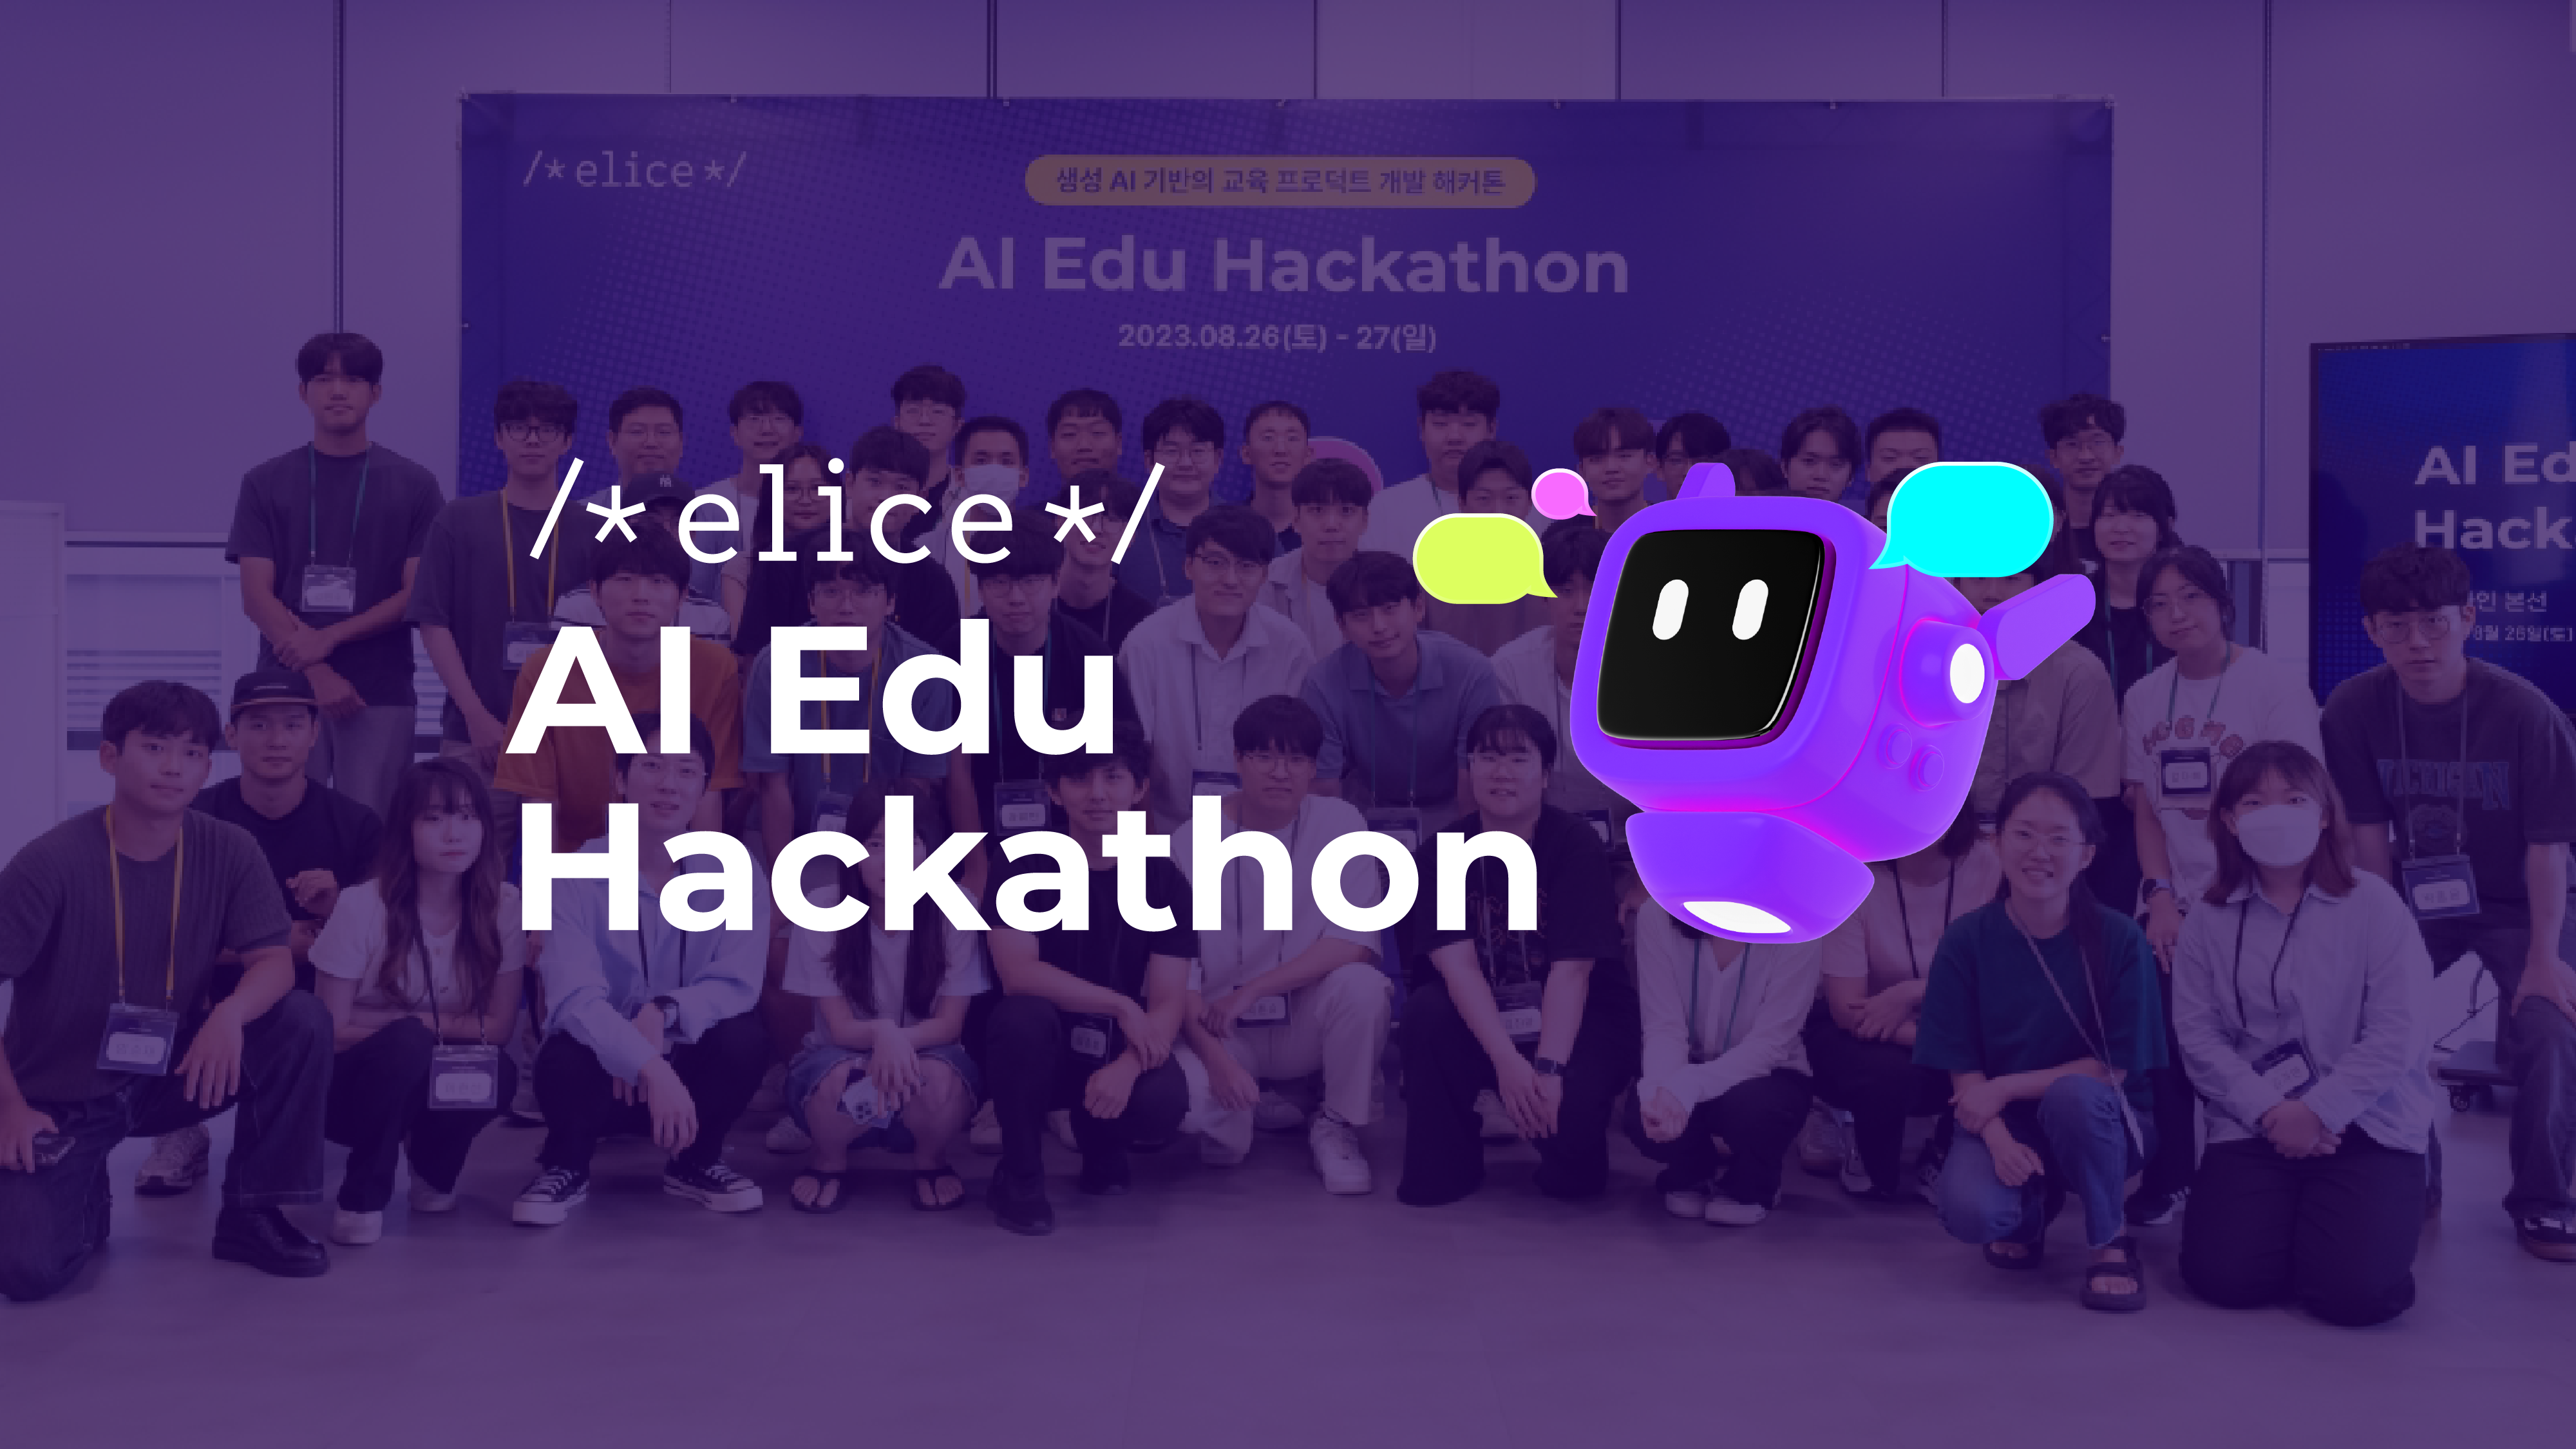 Large-scale AI hackathon with over 1,500 participants 